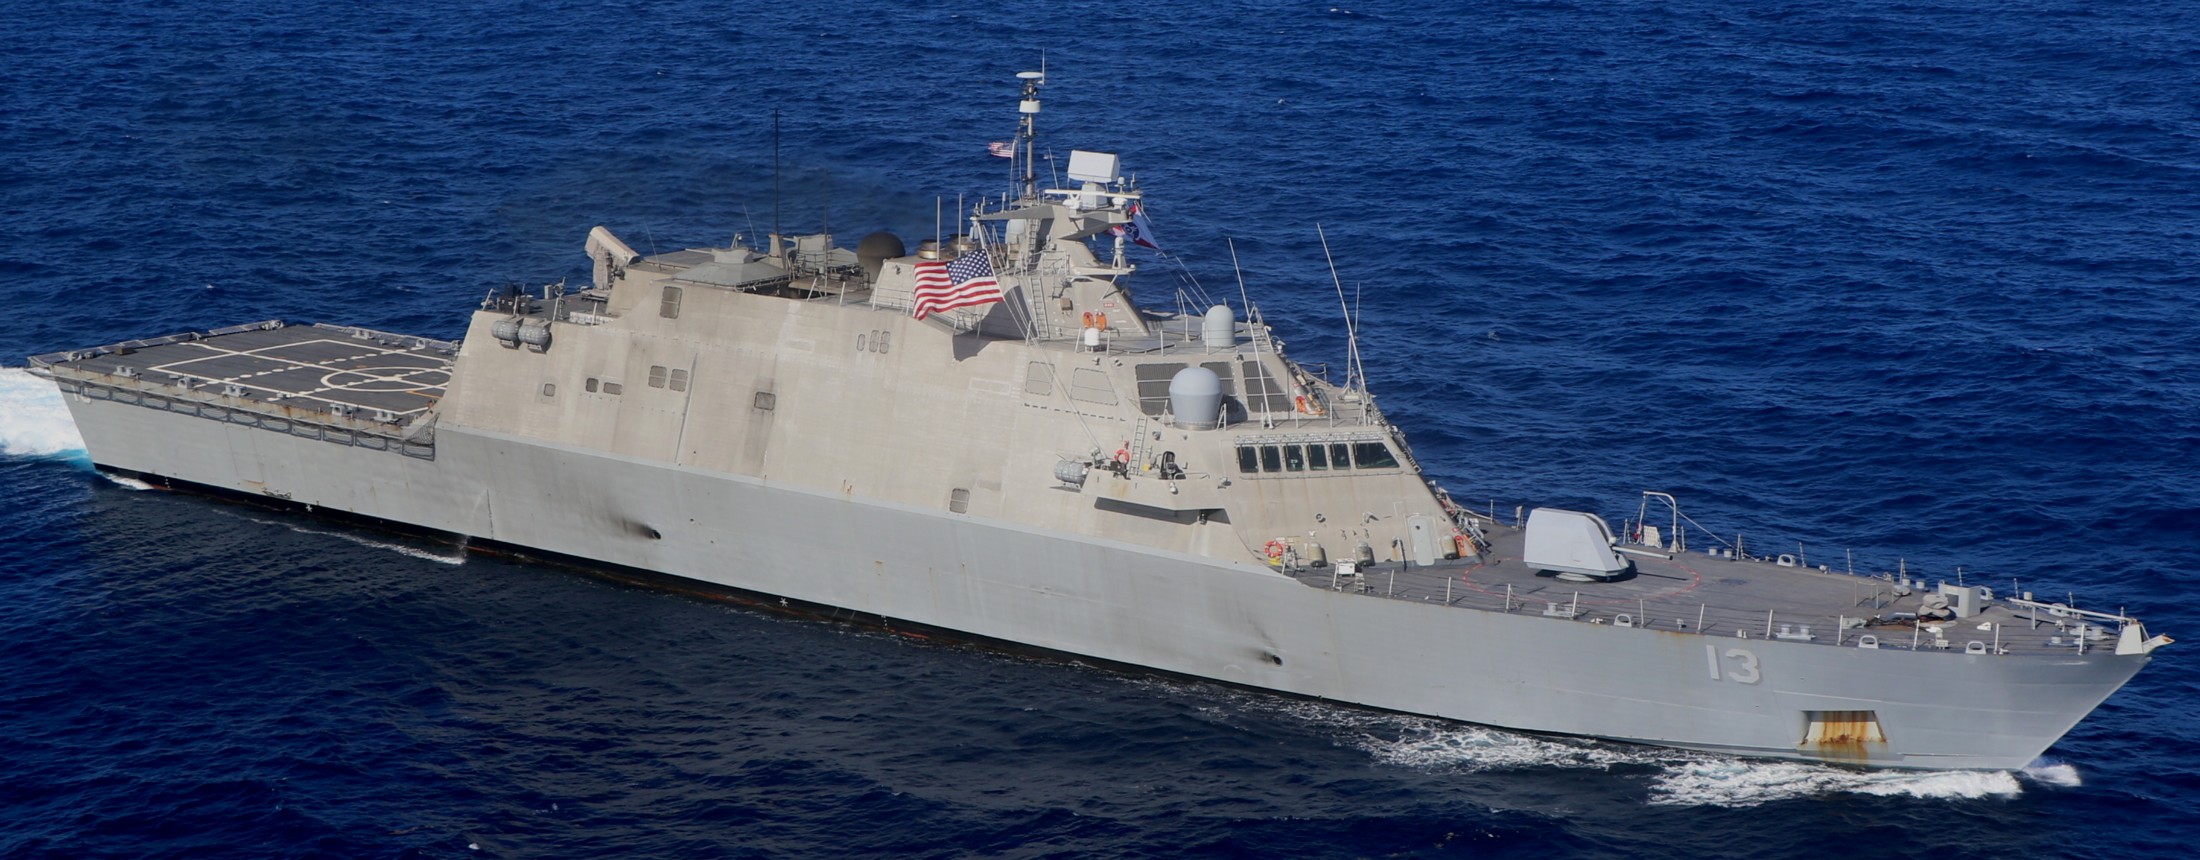 lcs-13 uss wichita freedom class littoral combat ship us navy caribbean sea 28